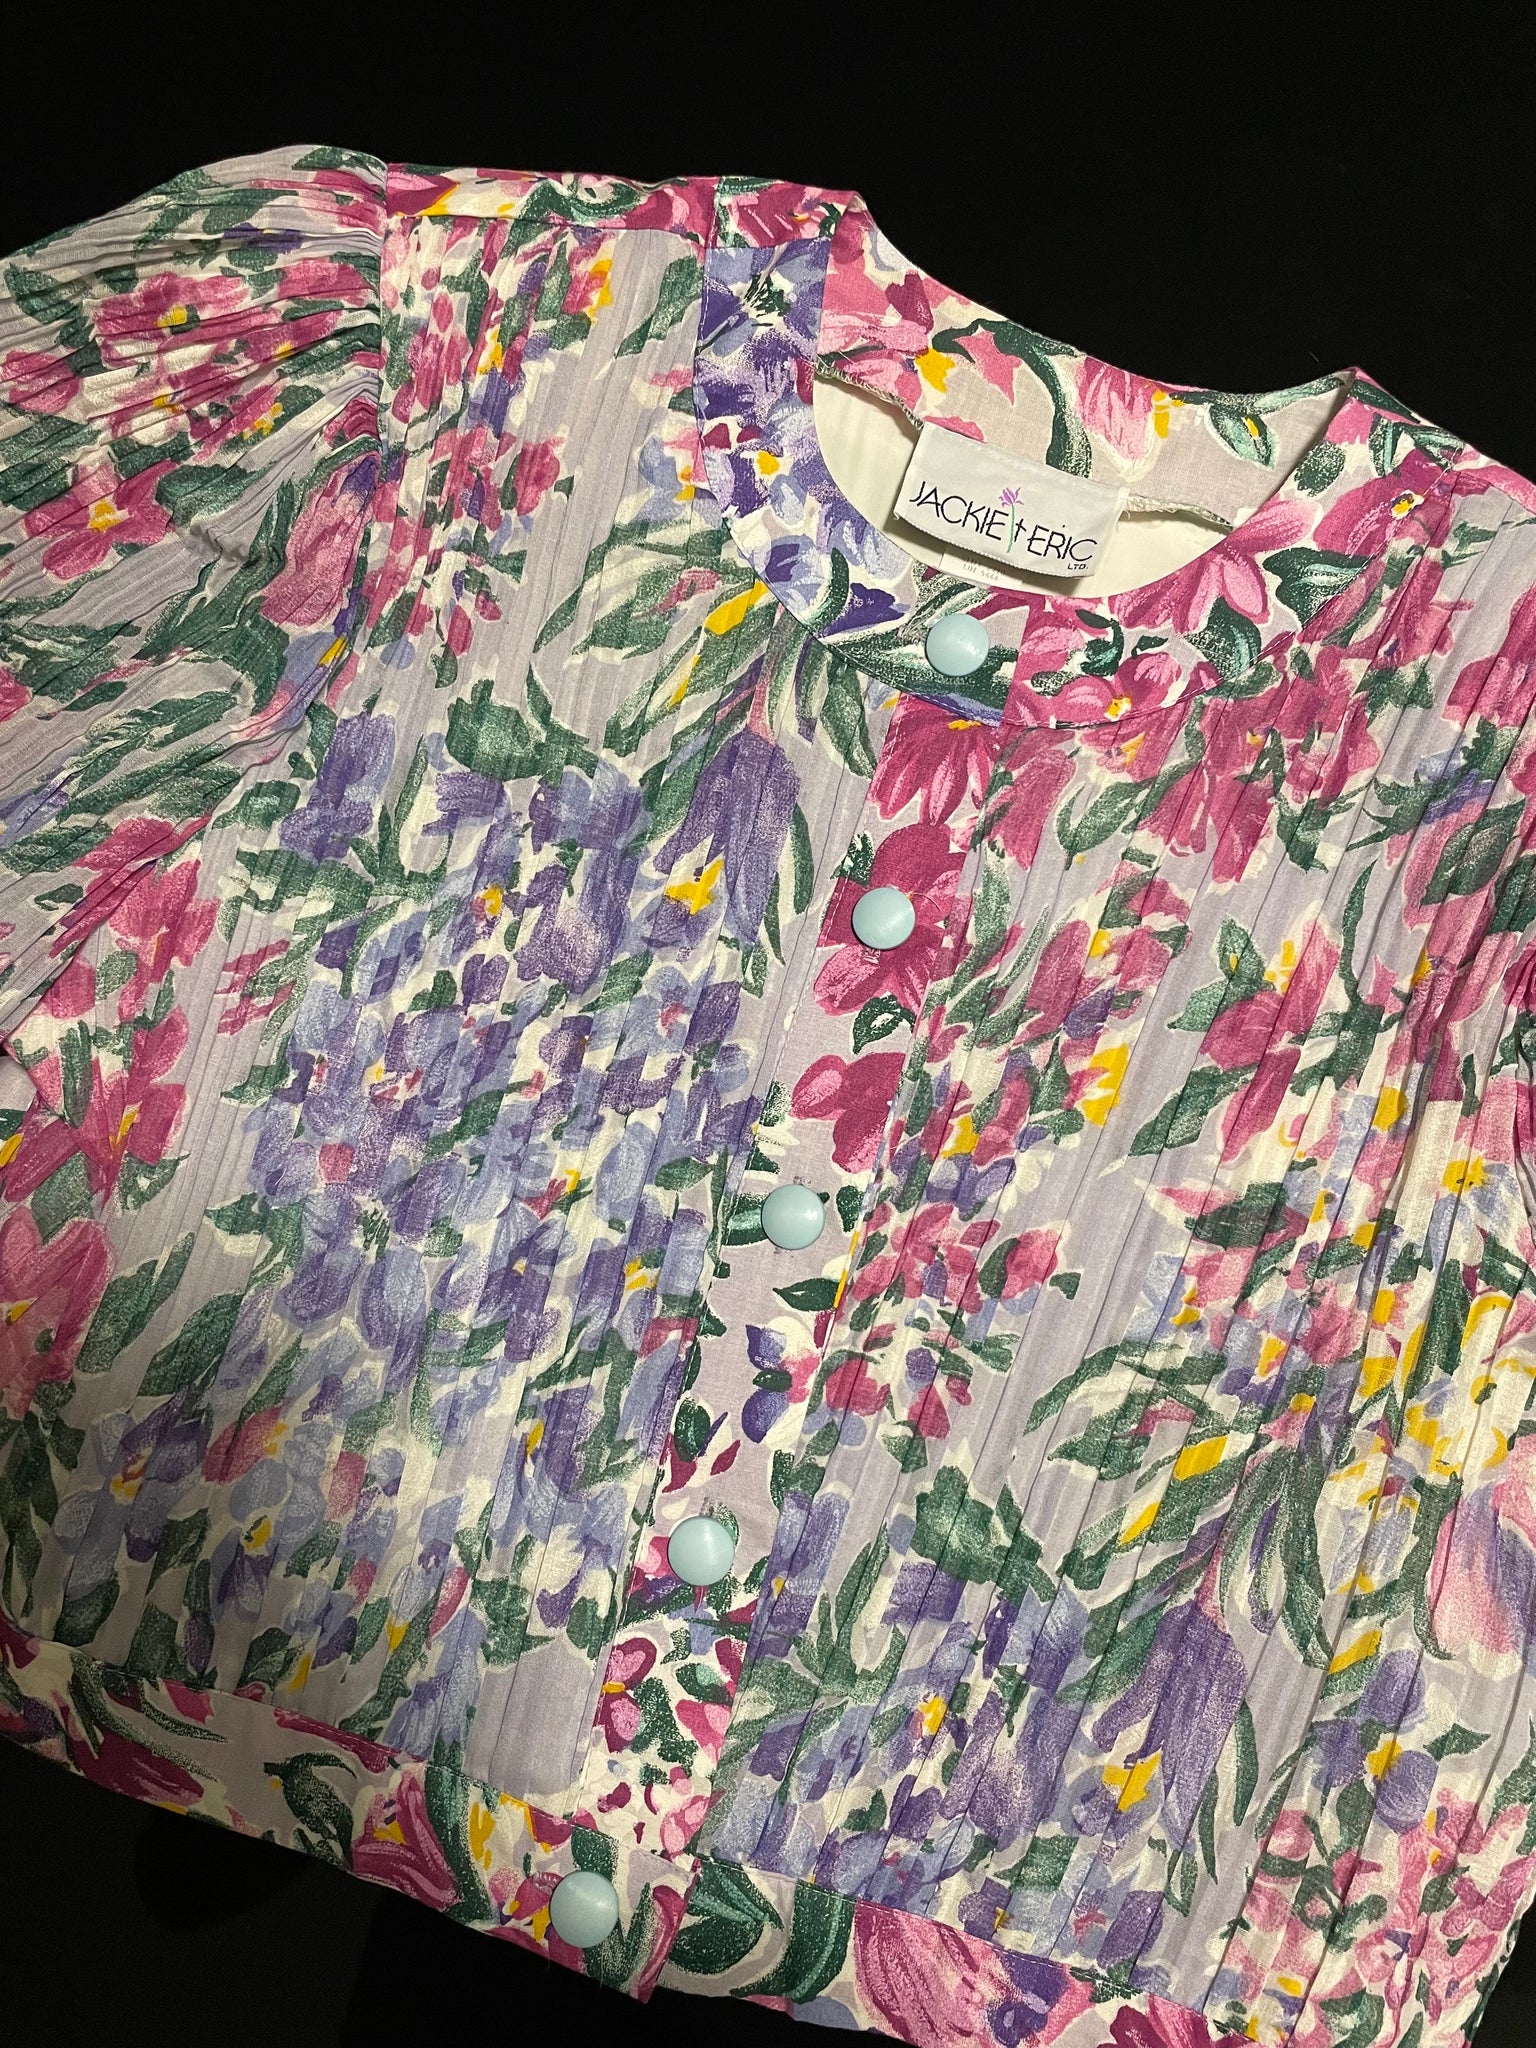 NEW Vintage 80s floral blazer, Size 14